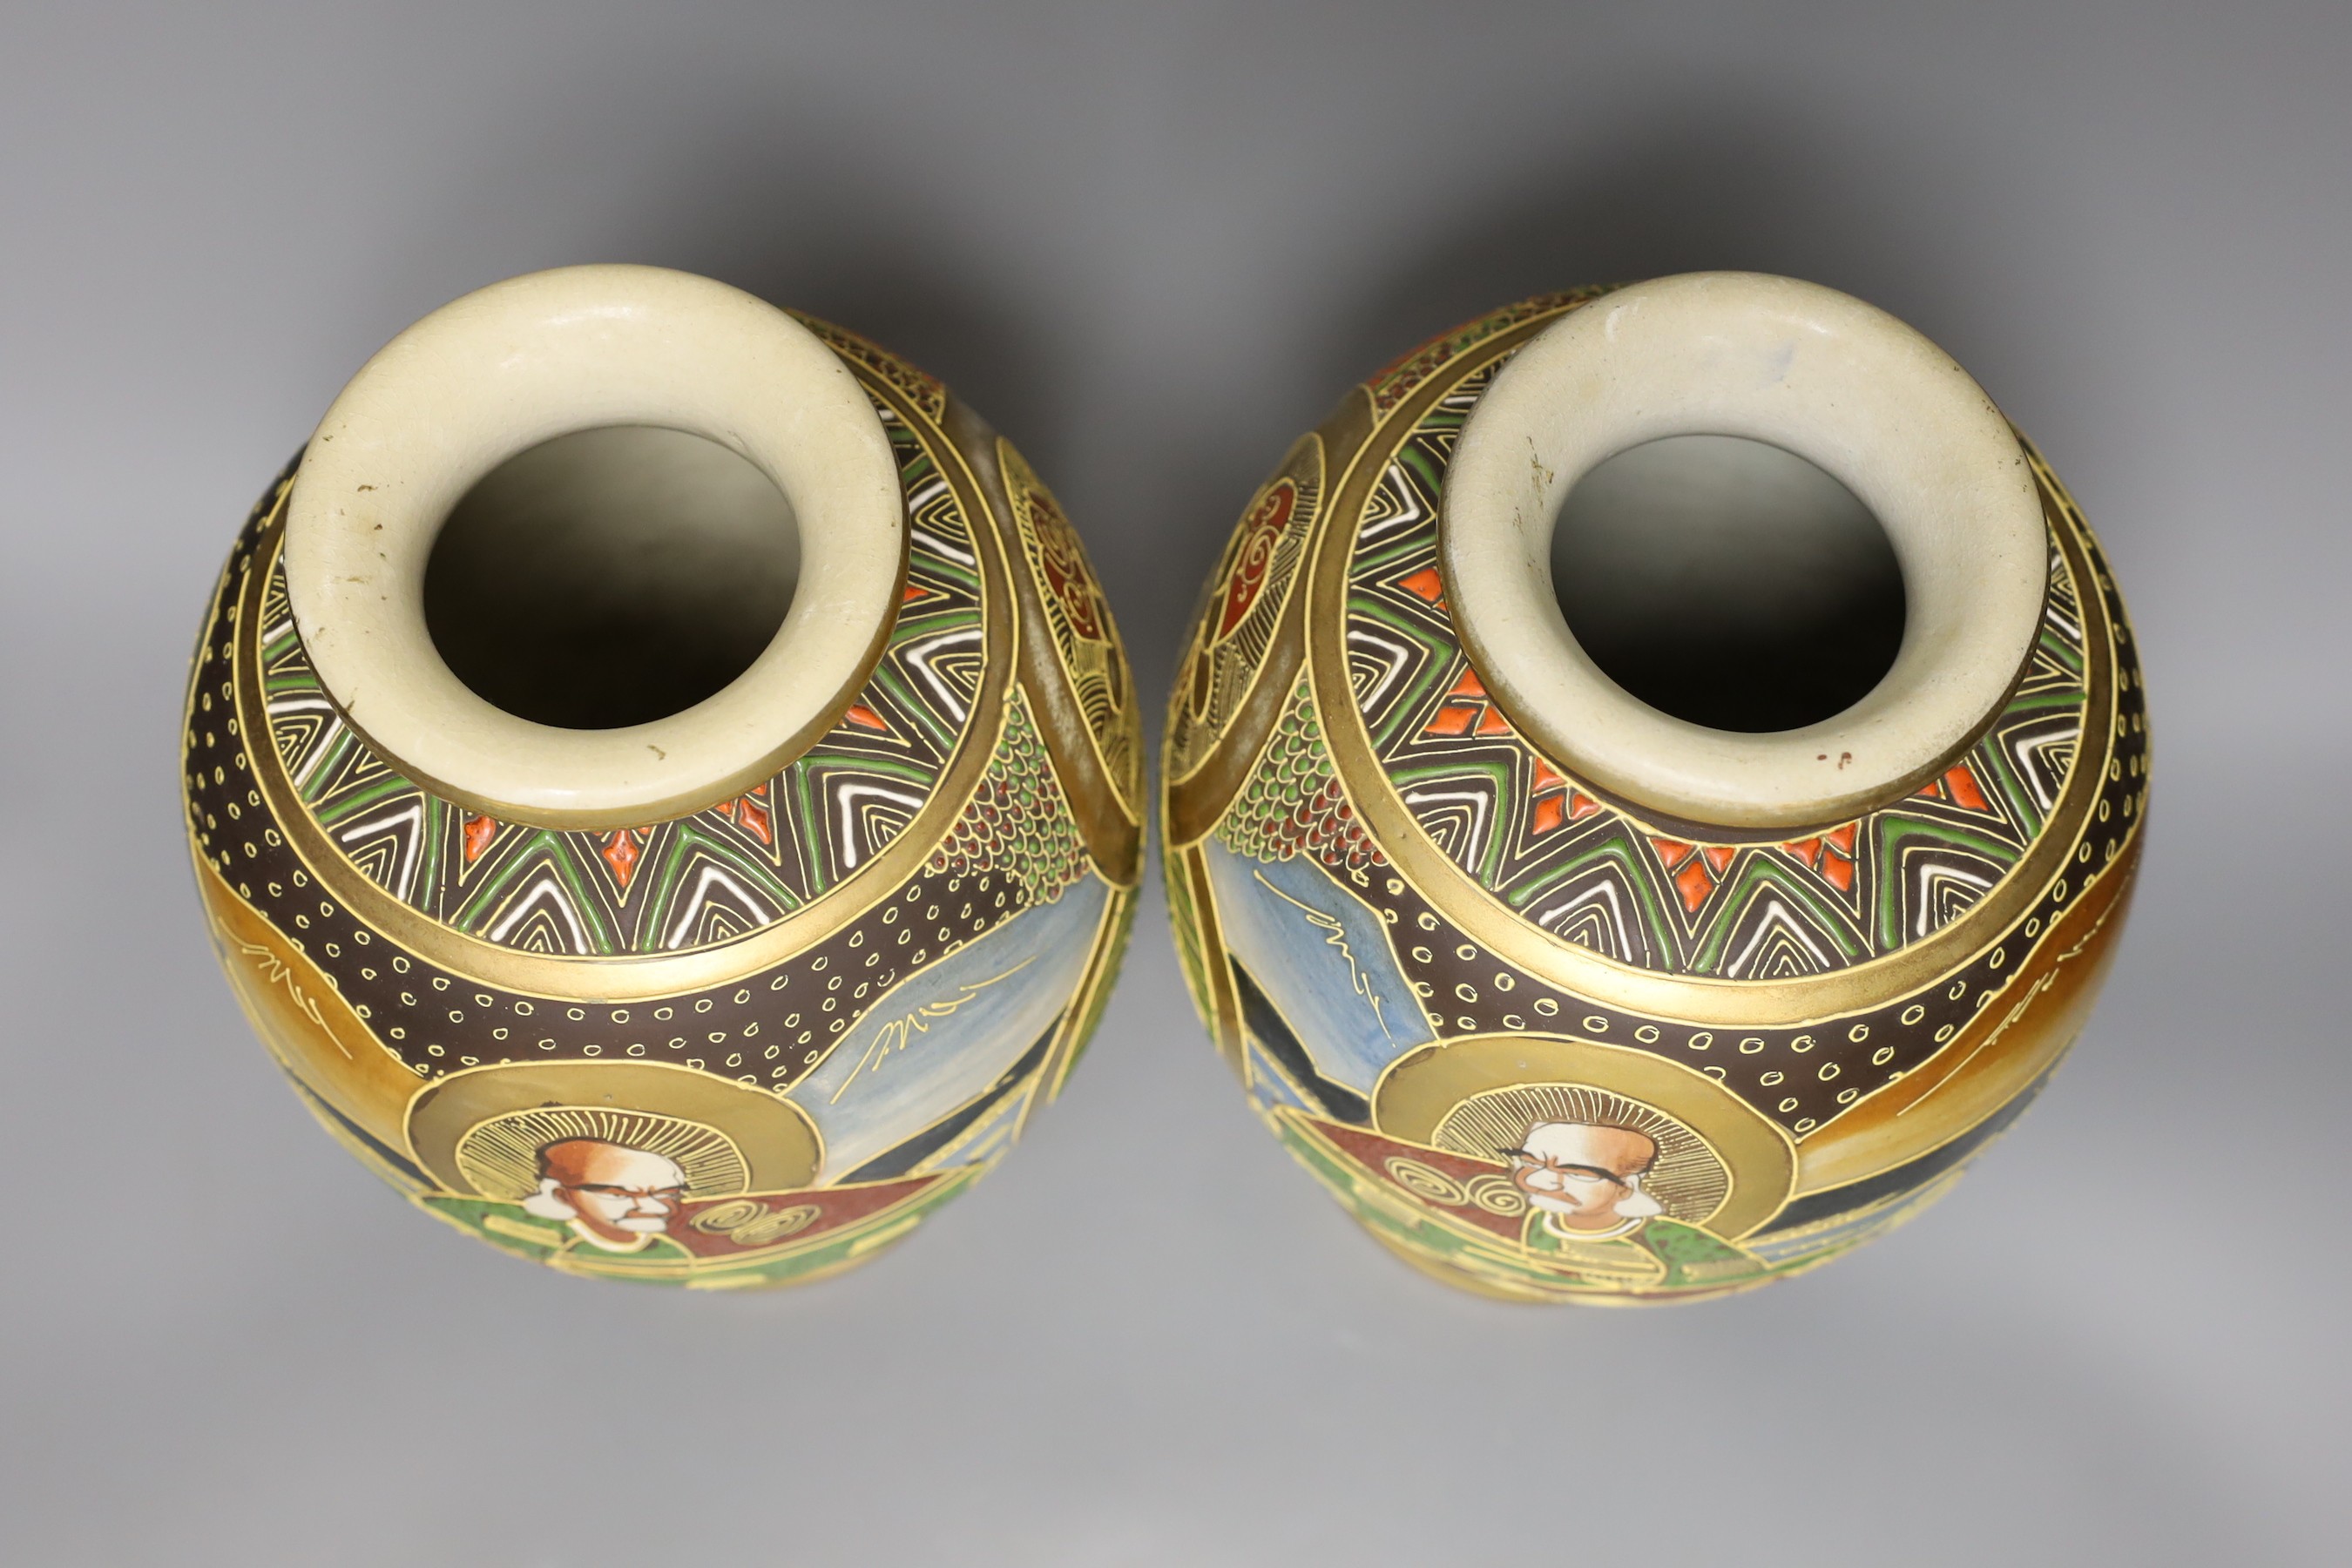 A pair of Satsuma vases, 31cm tall